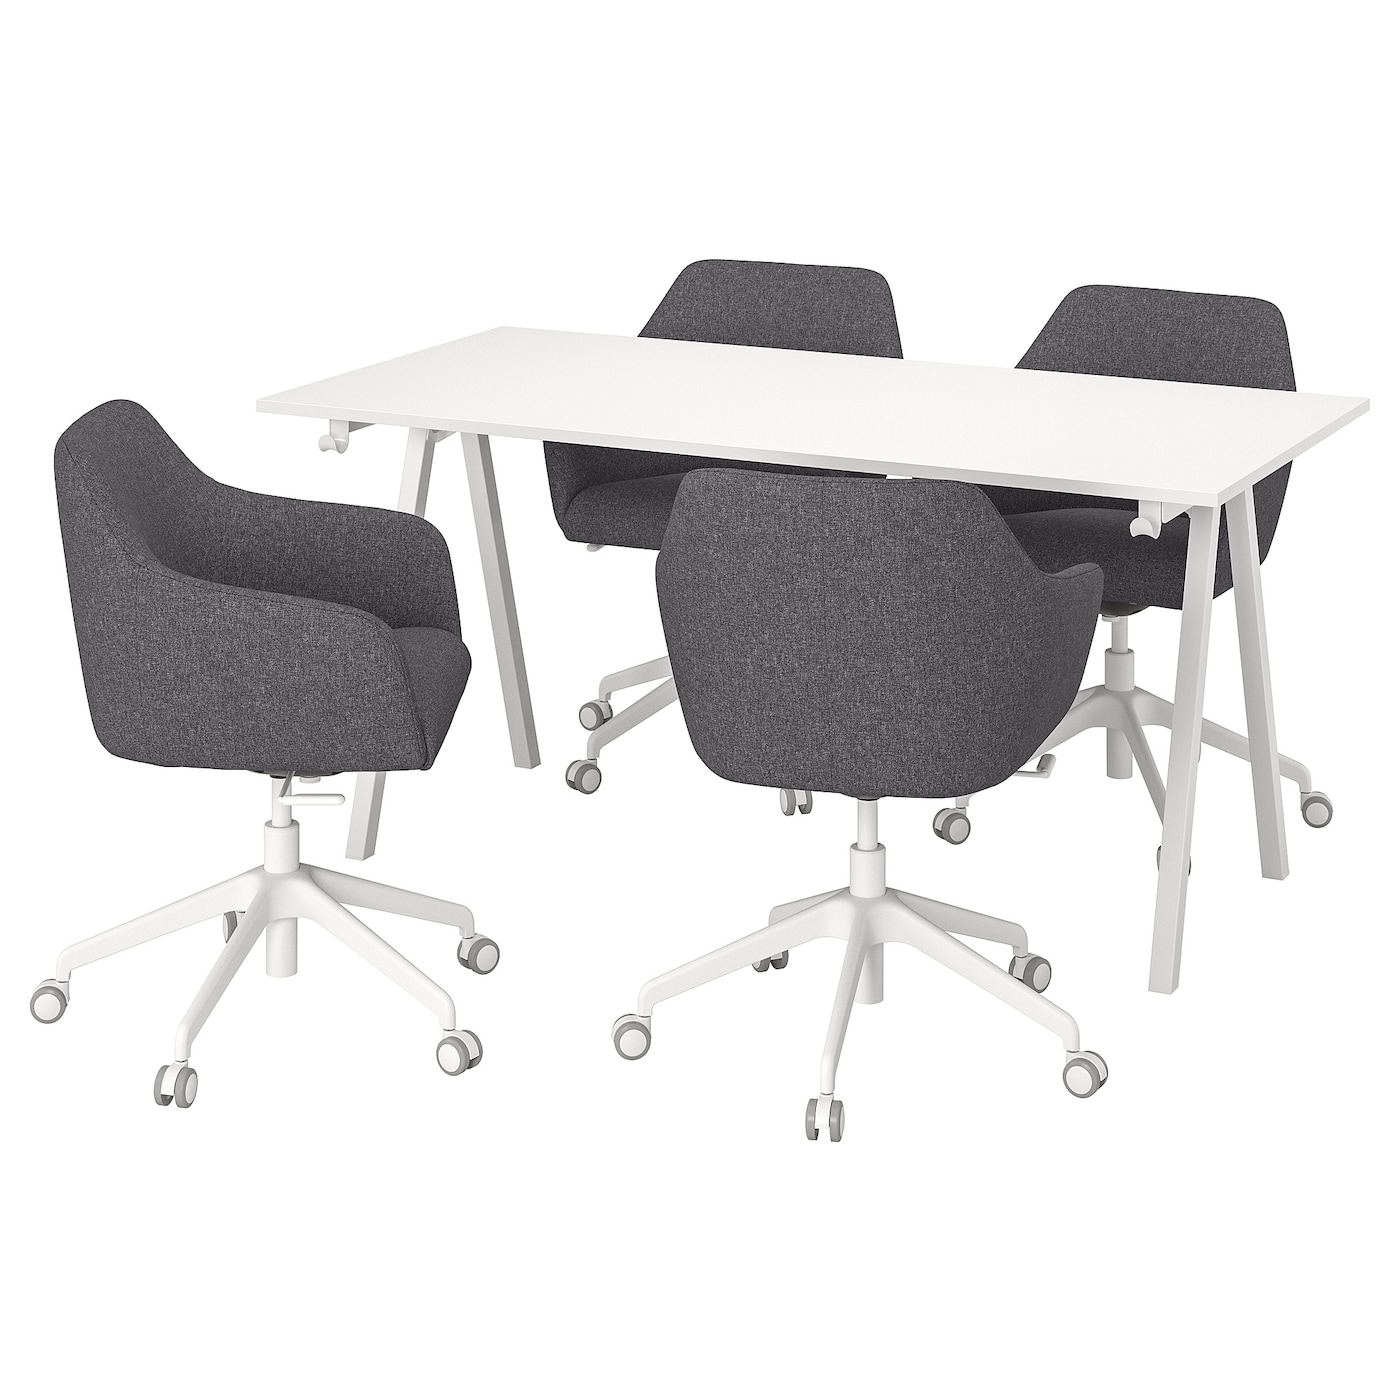 Комбинация: стол, 4 кресла - IKEA TROTTEN/TOSSBERG, 160х80 см, темно-серый/белый, ТРОТТЕН/ТОССБЕРГ ИКЕА